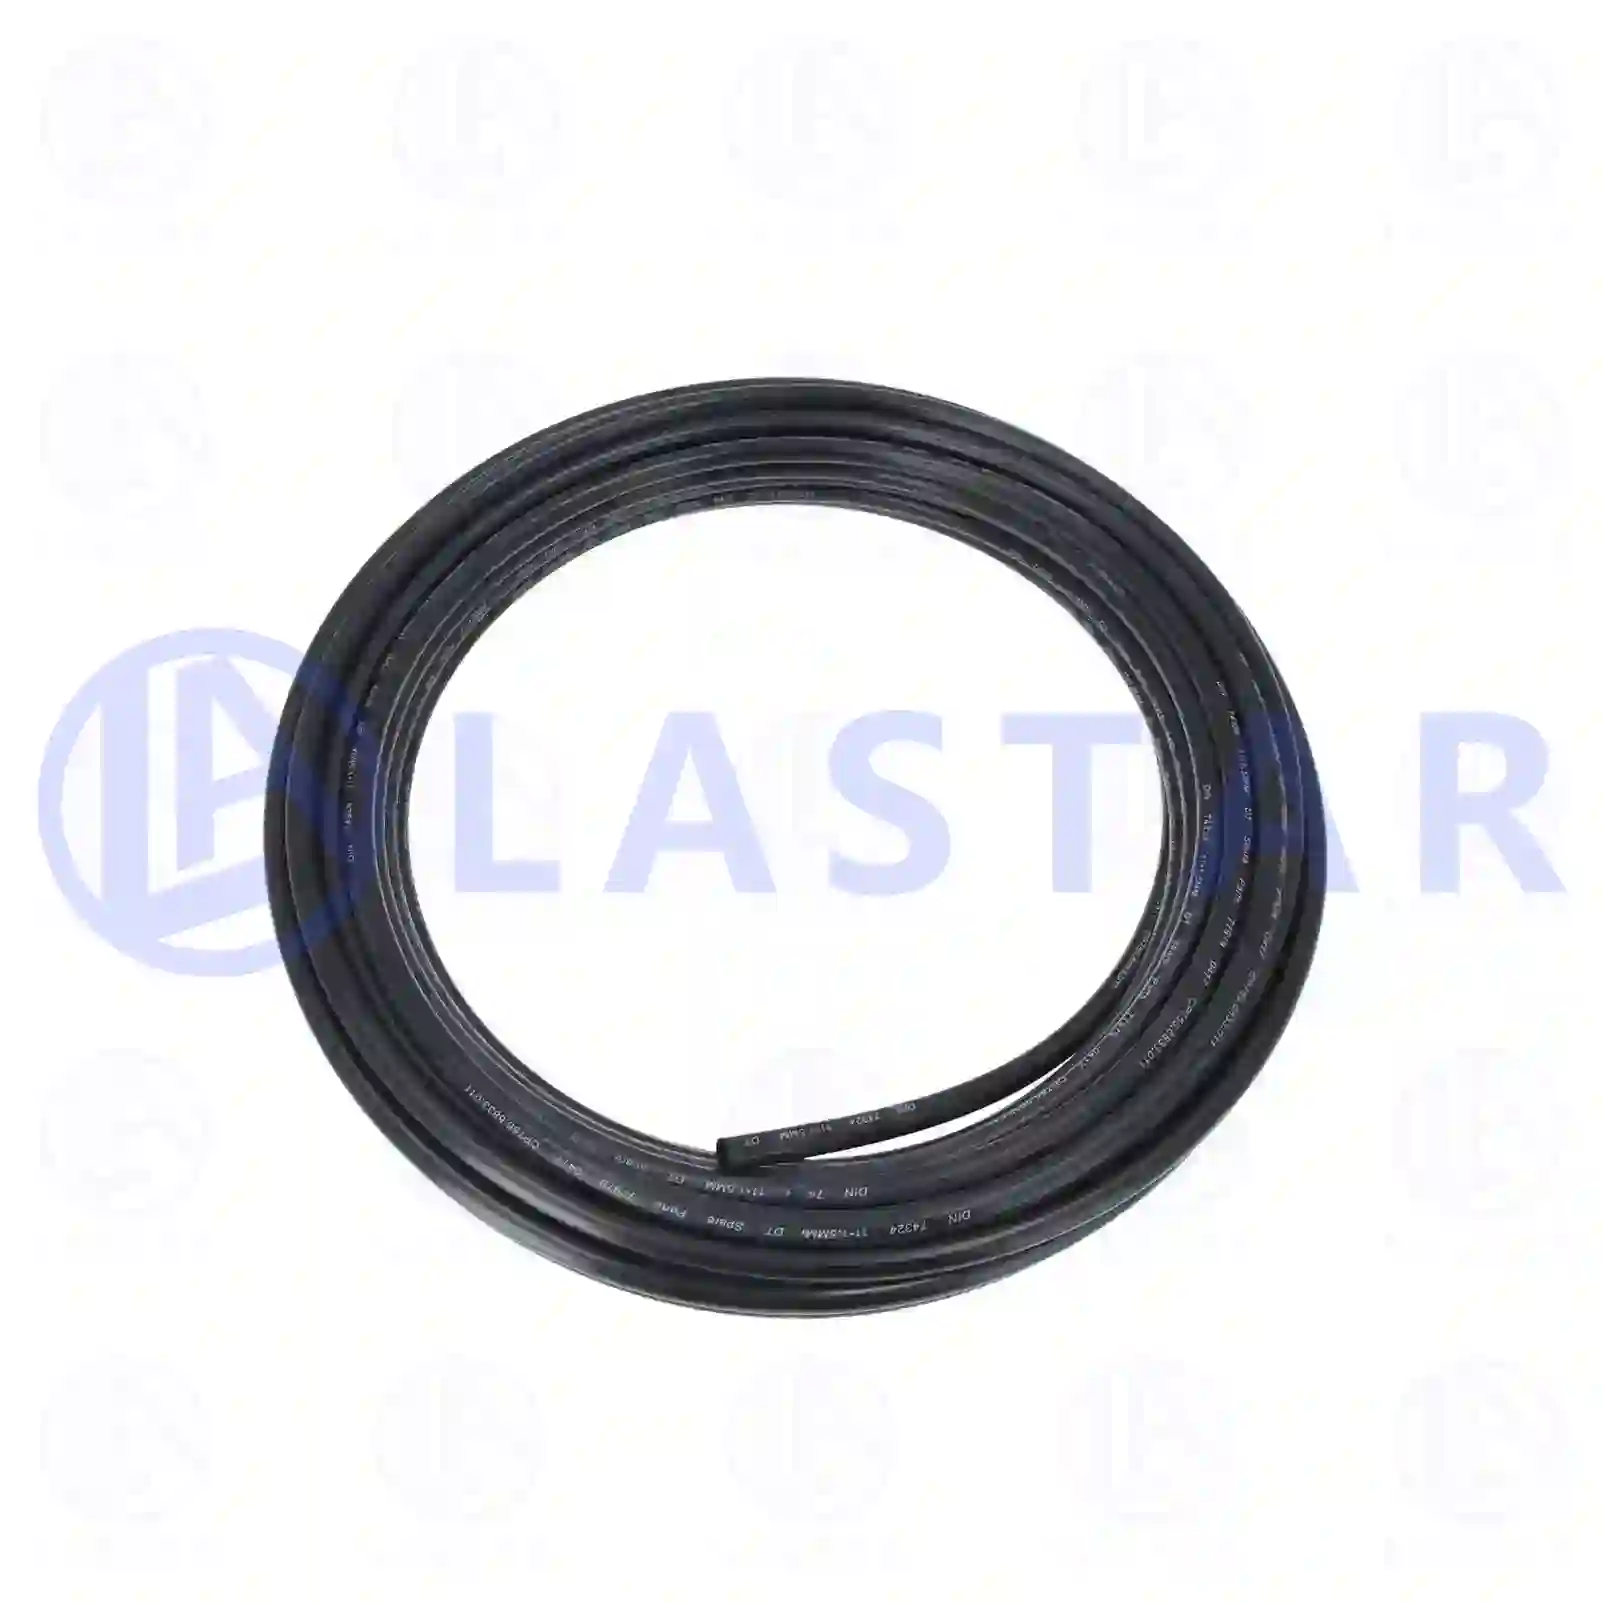 Compressed Air Nylon pipe, black, la no: 77725576 ,  oem no:883674, 04351609211, 04351609611, 04351609711, 51963300210, 51963300381, 51963300388, 86461310111, 0089975482, 0089975582, 5689330661, ZG50533-0008 Lastar Spare Part | Truck Spare Parts, Auotomotive Spare Parts